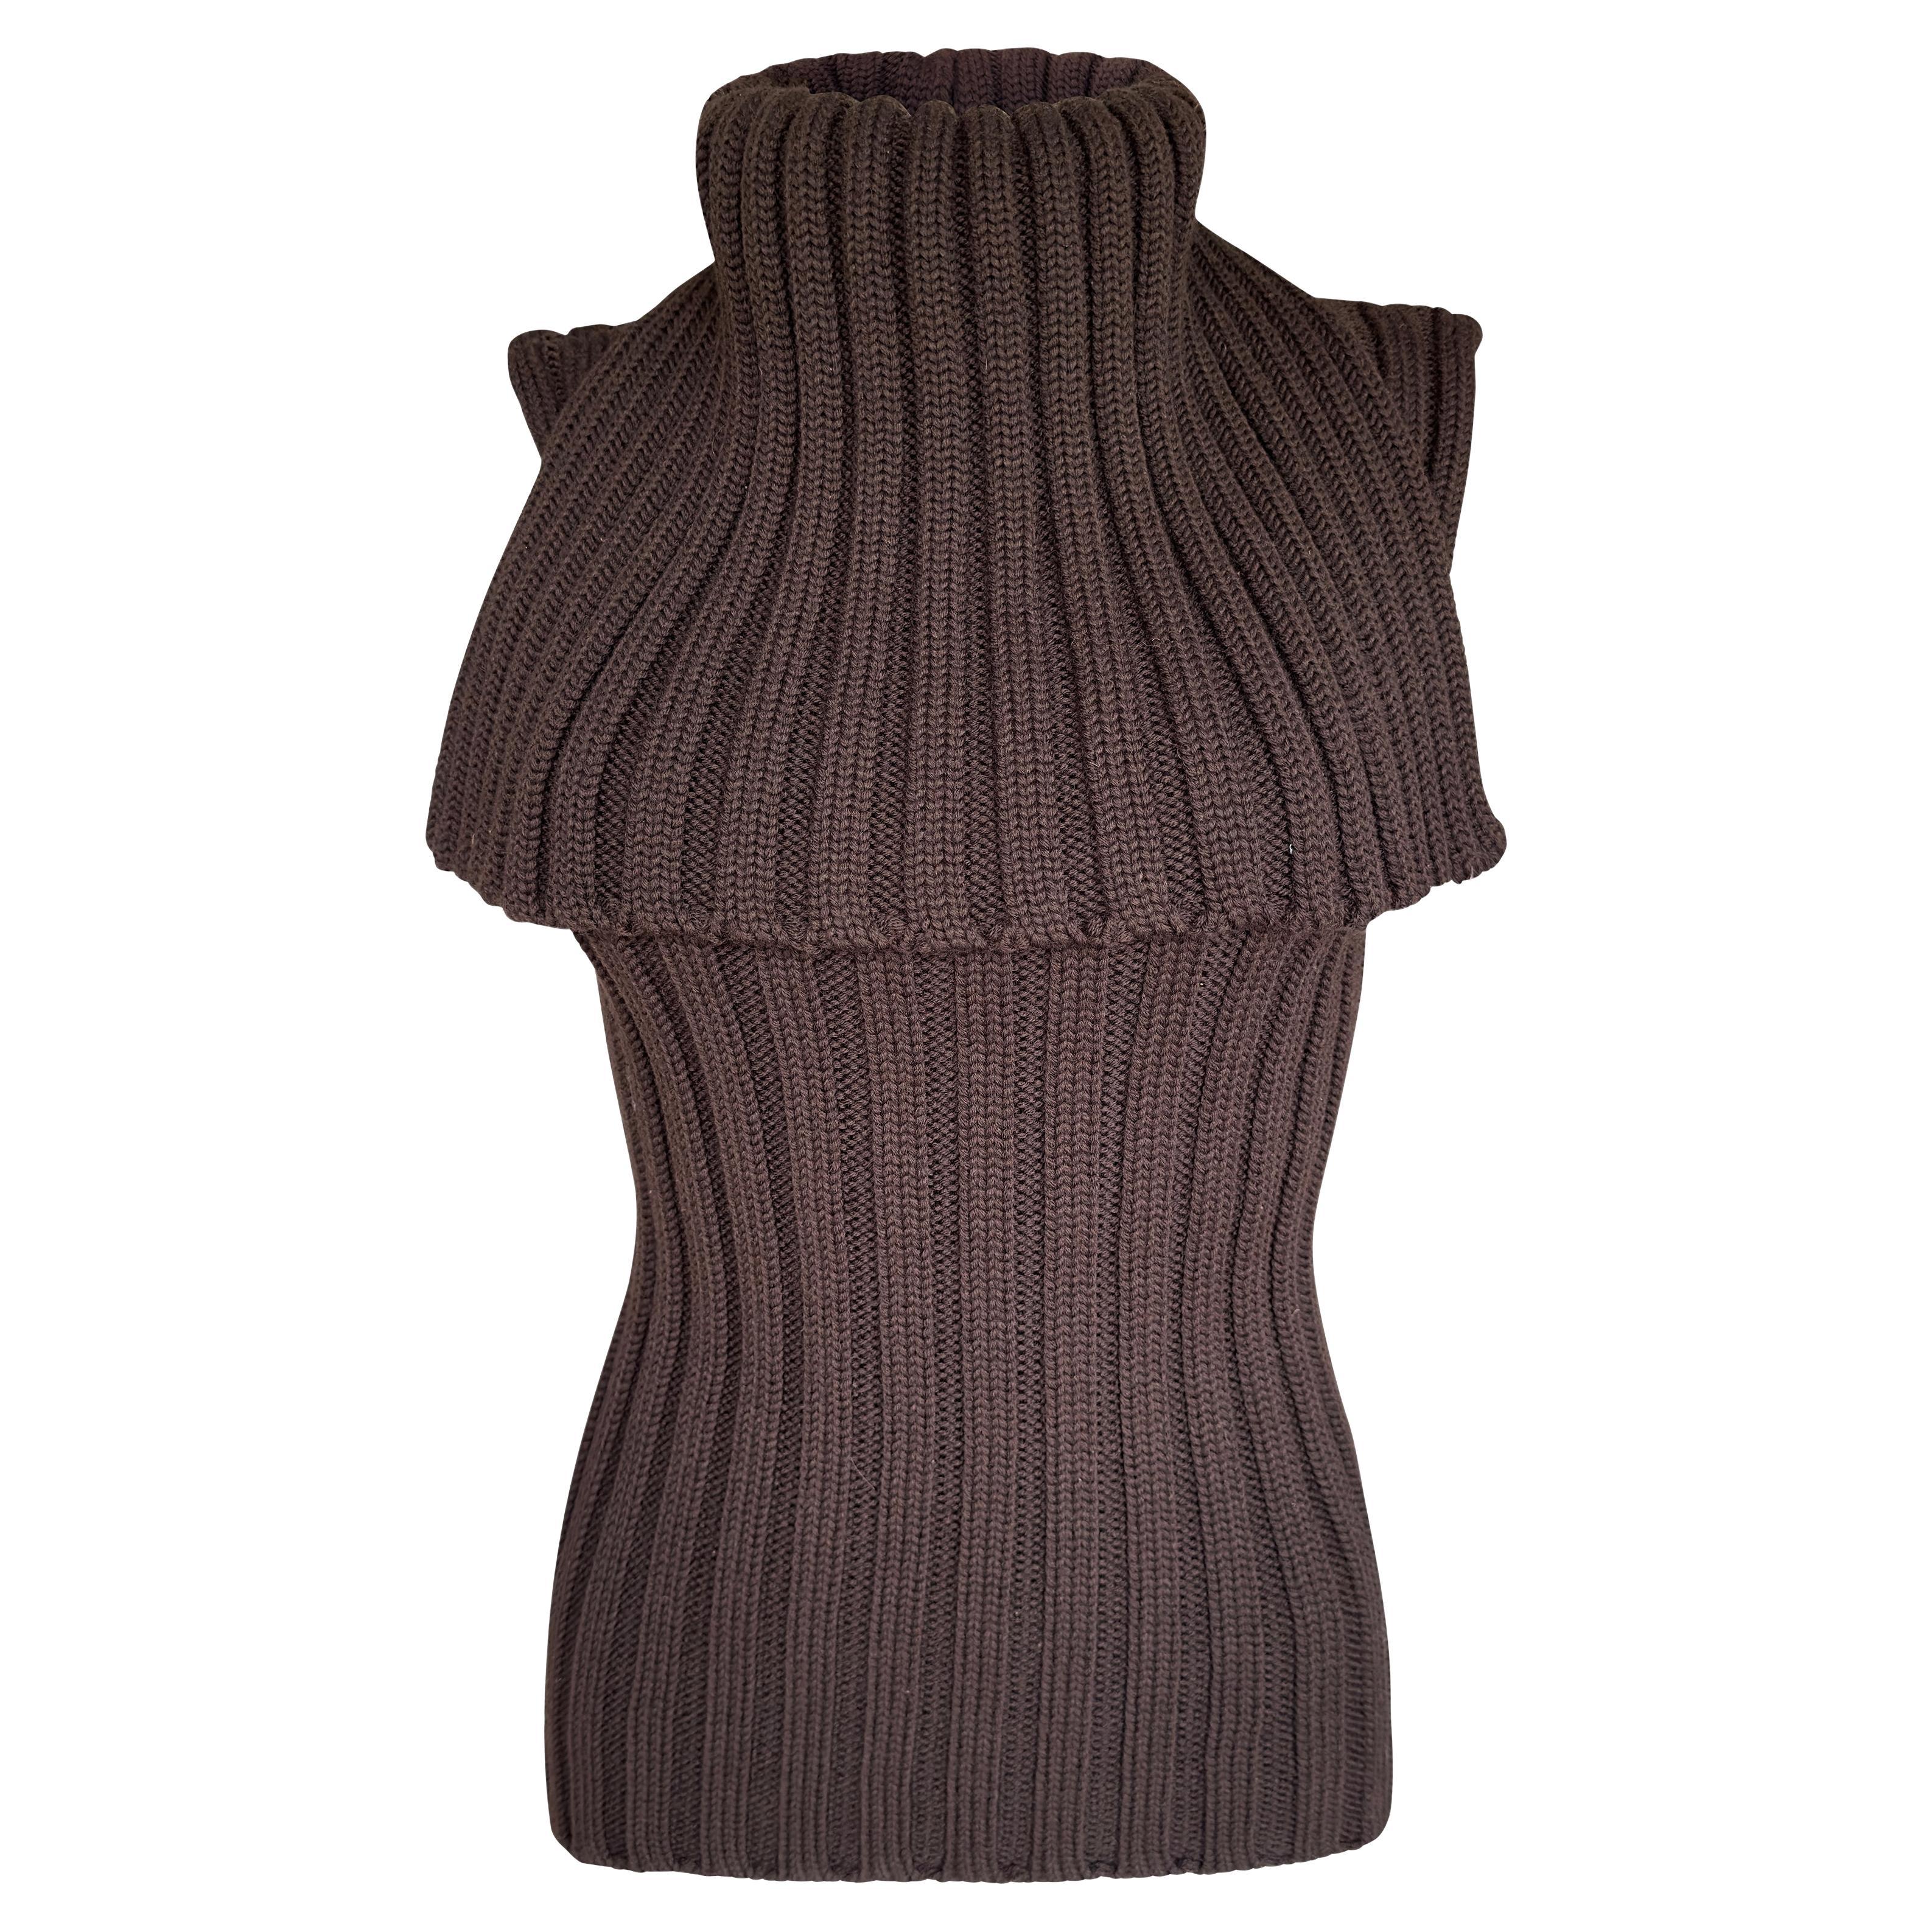 Vintage Dolce & Gabbana brown wool vest sweater turtleneck top-runway F/W 2002 